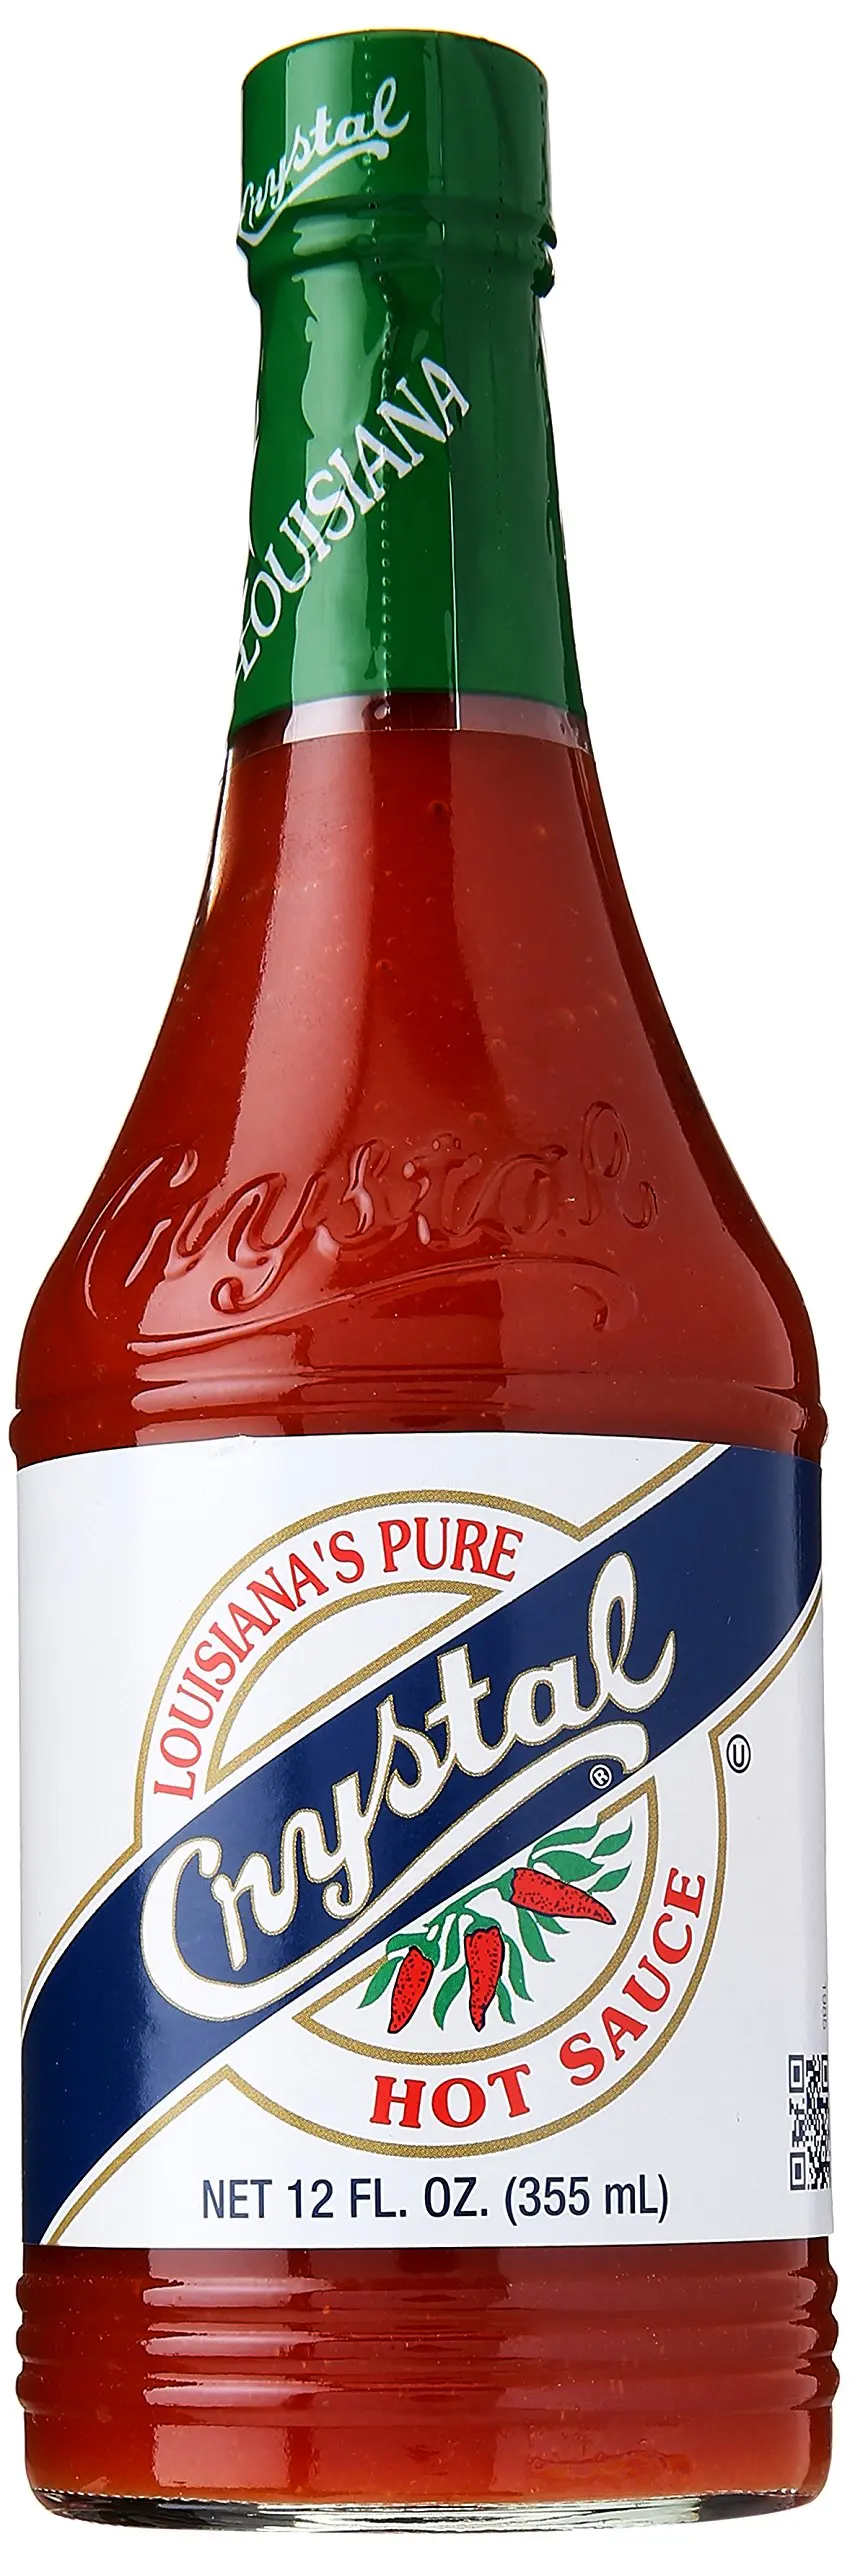 3.75. Crystal Hot Sauce Louisiana's Pure Hot Sauce - 12 oz. 